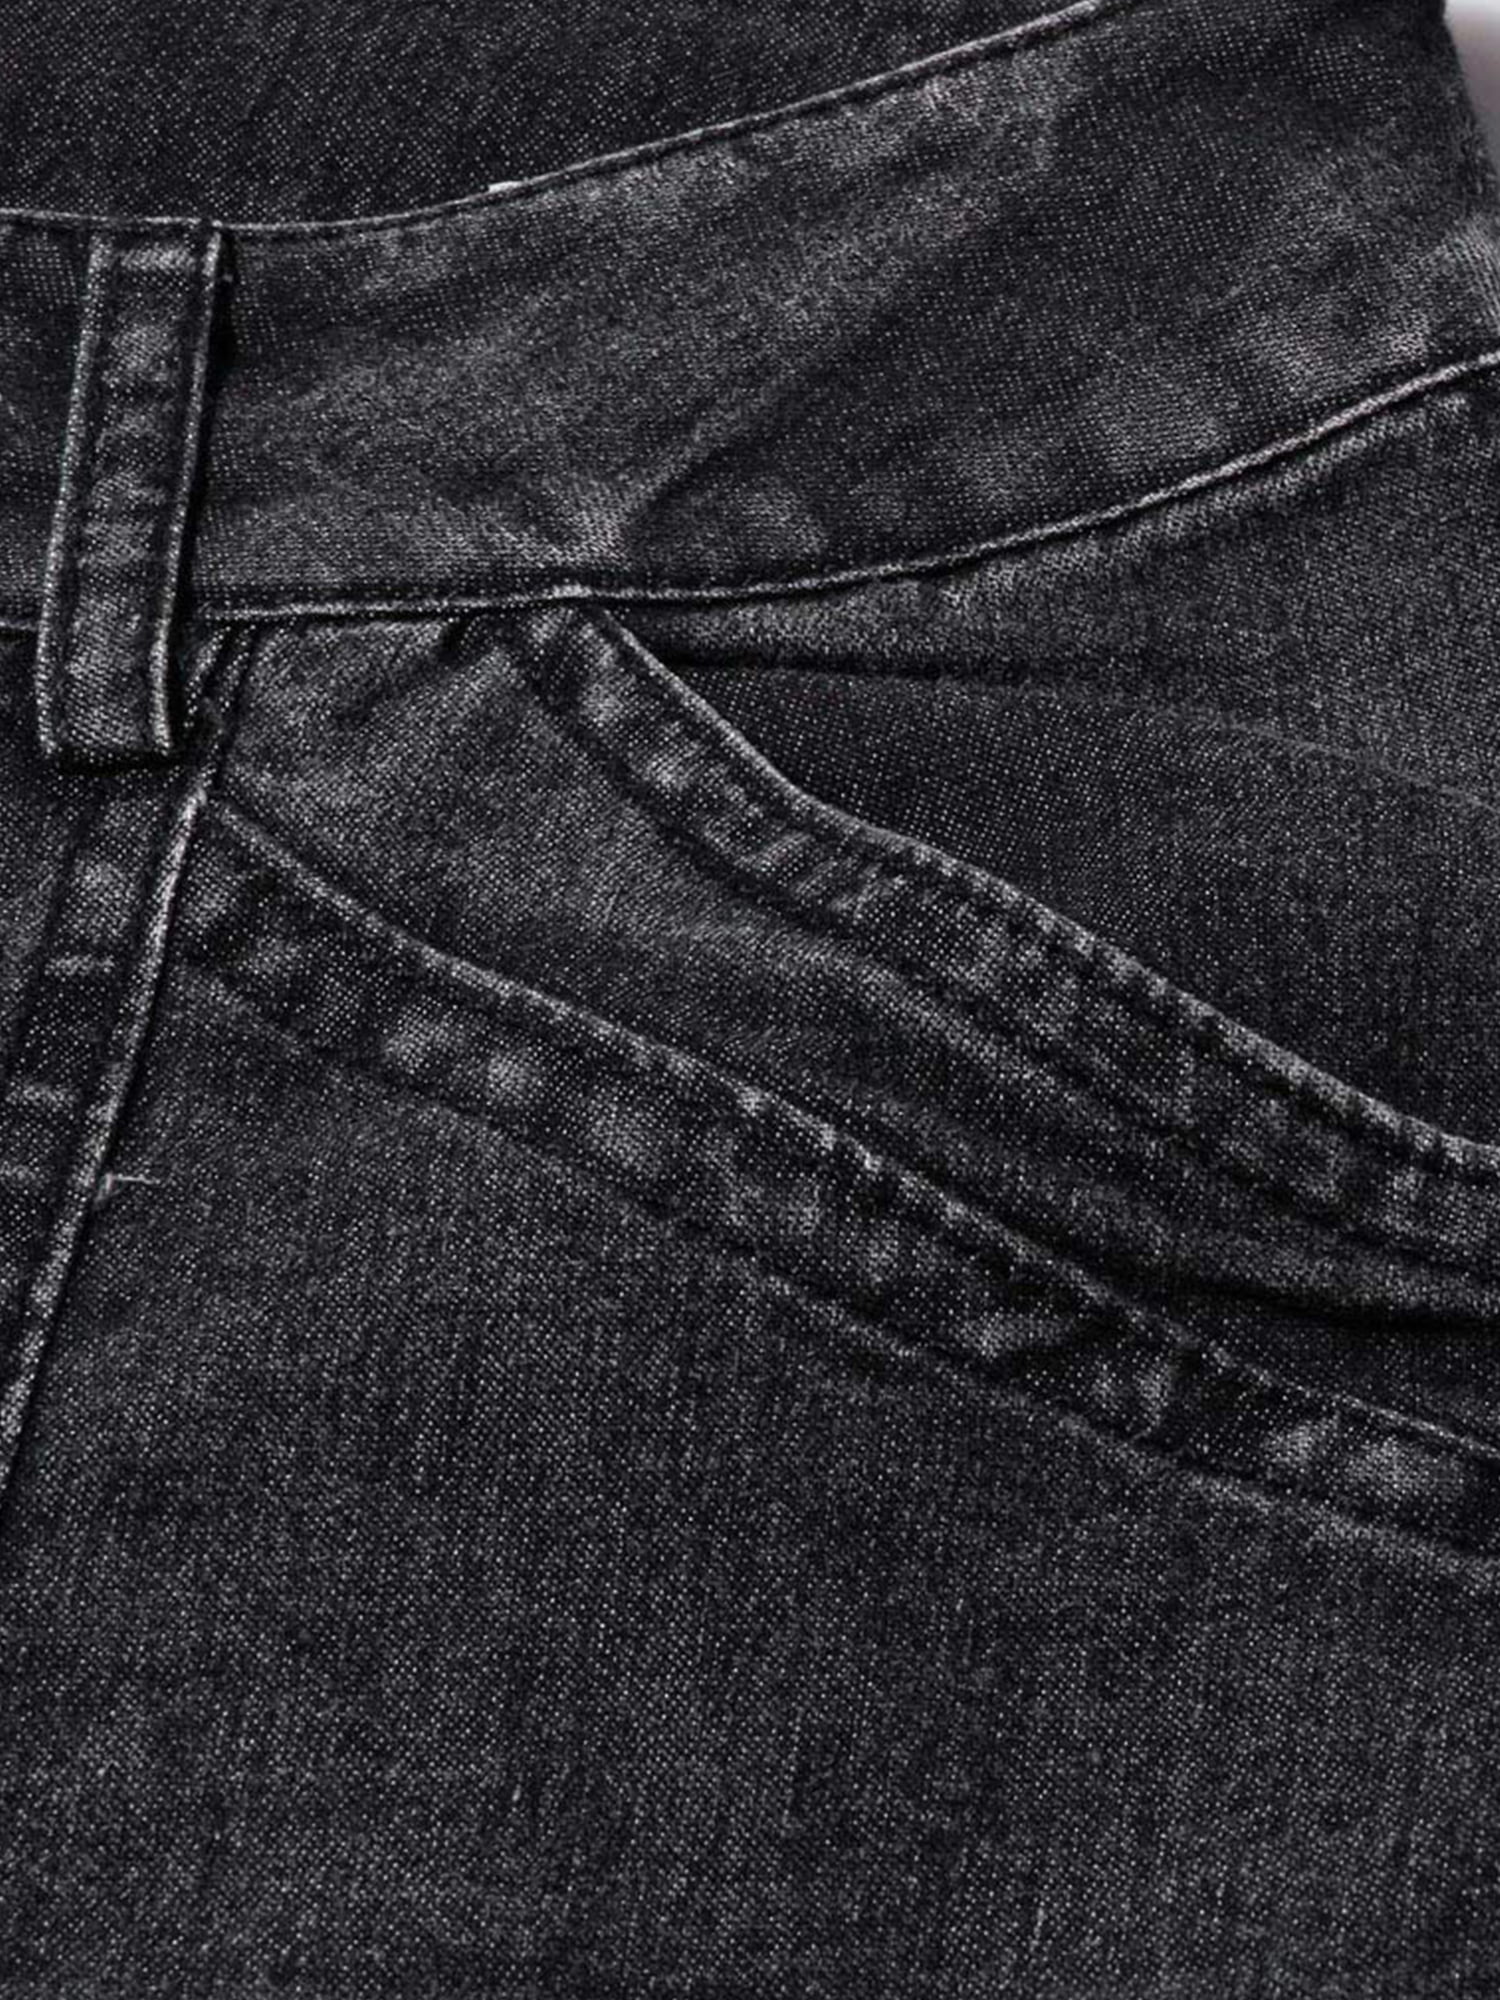 Capreze Women Buttoned Bootcut Jeans Casual Flare Denim Pants Bell Bottom  Jeans with Pockets Light Blue L